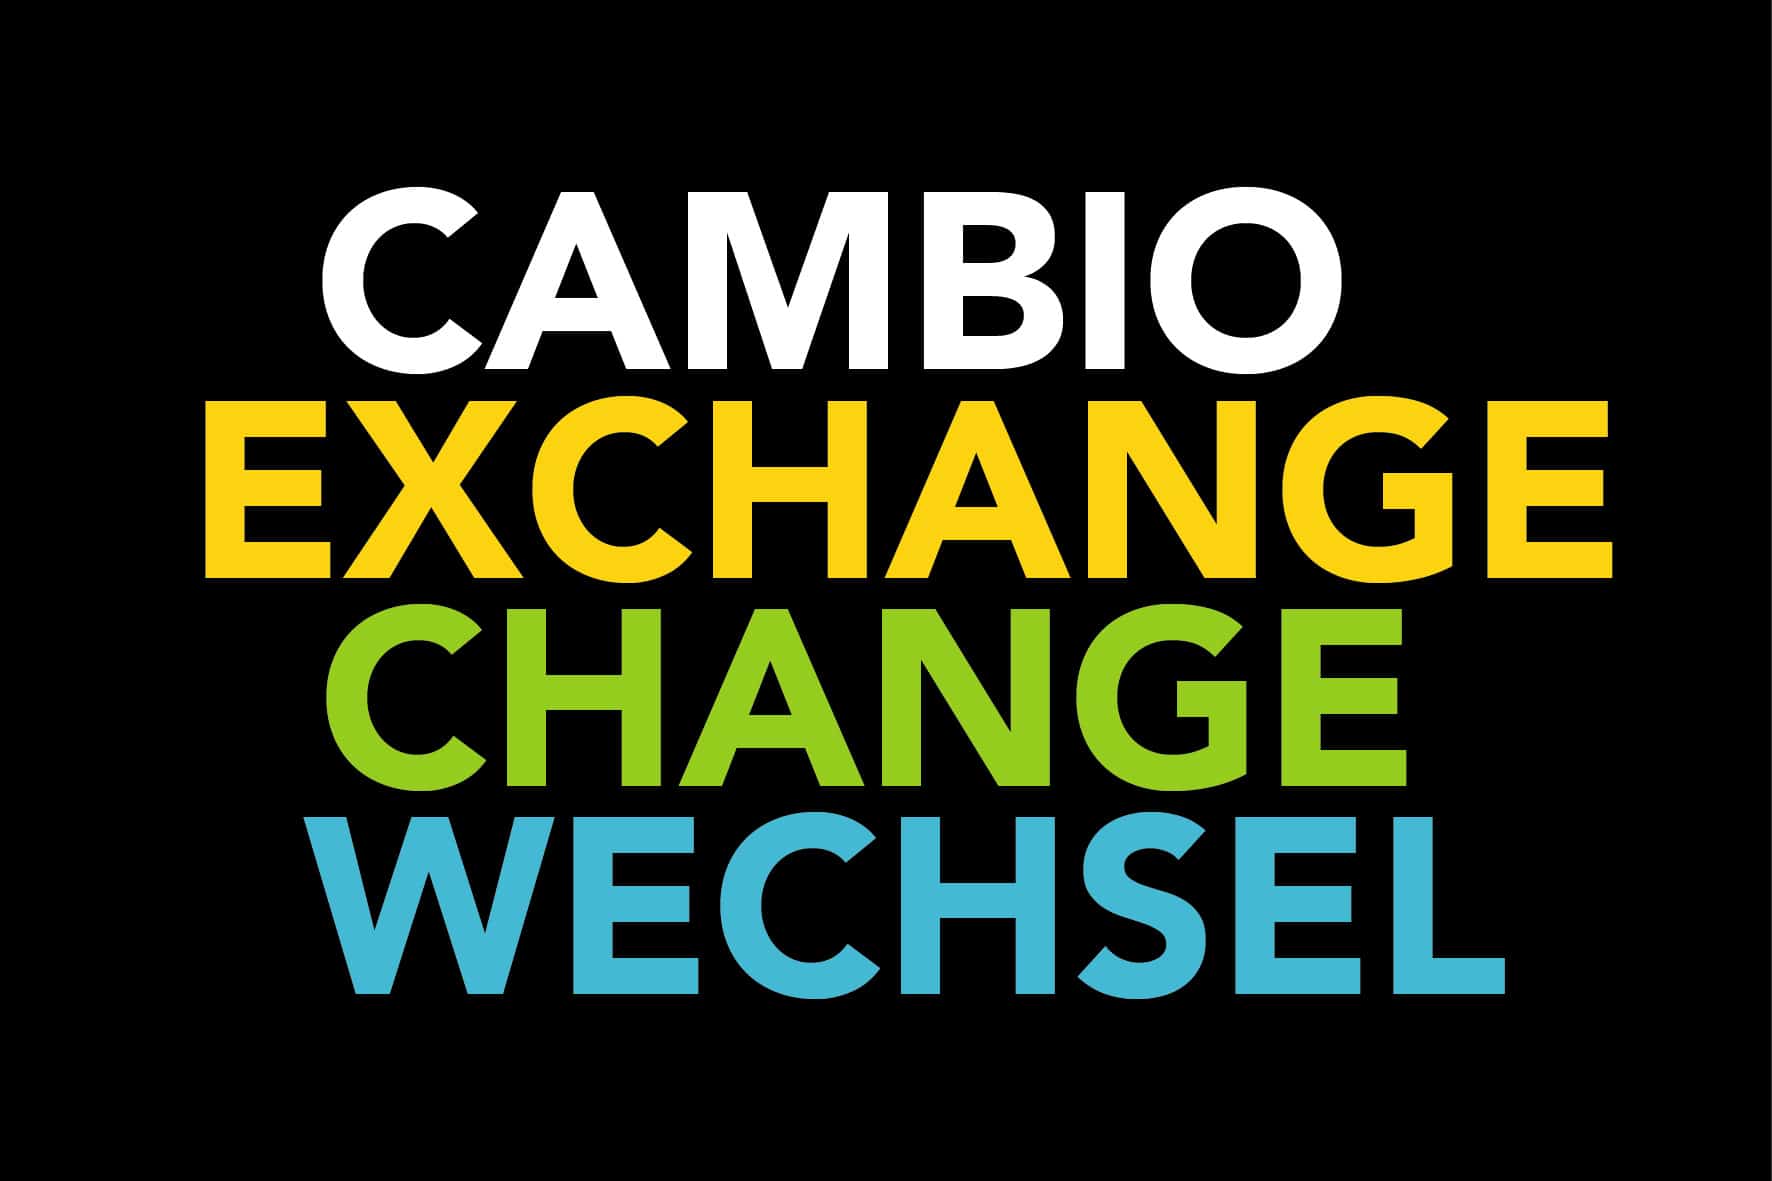 Cambio - Exchange - Change - Wechsel.